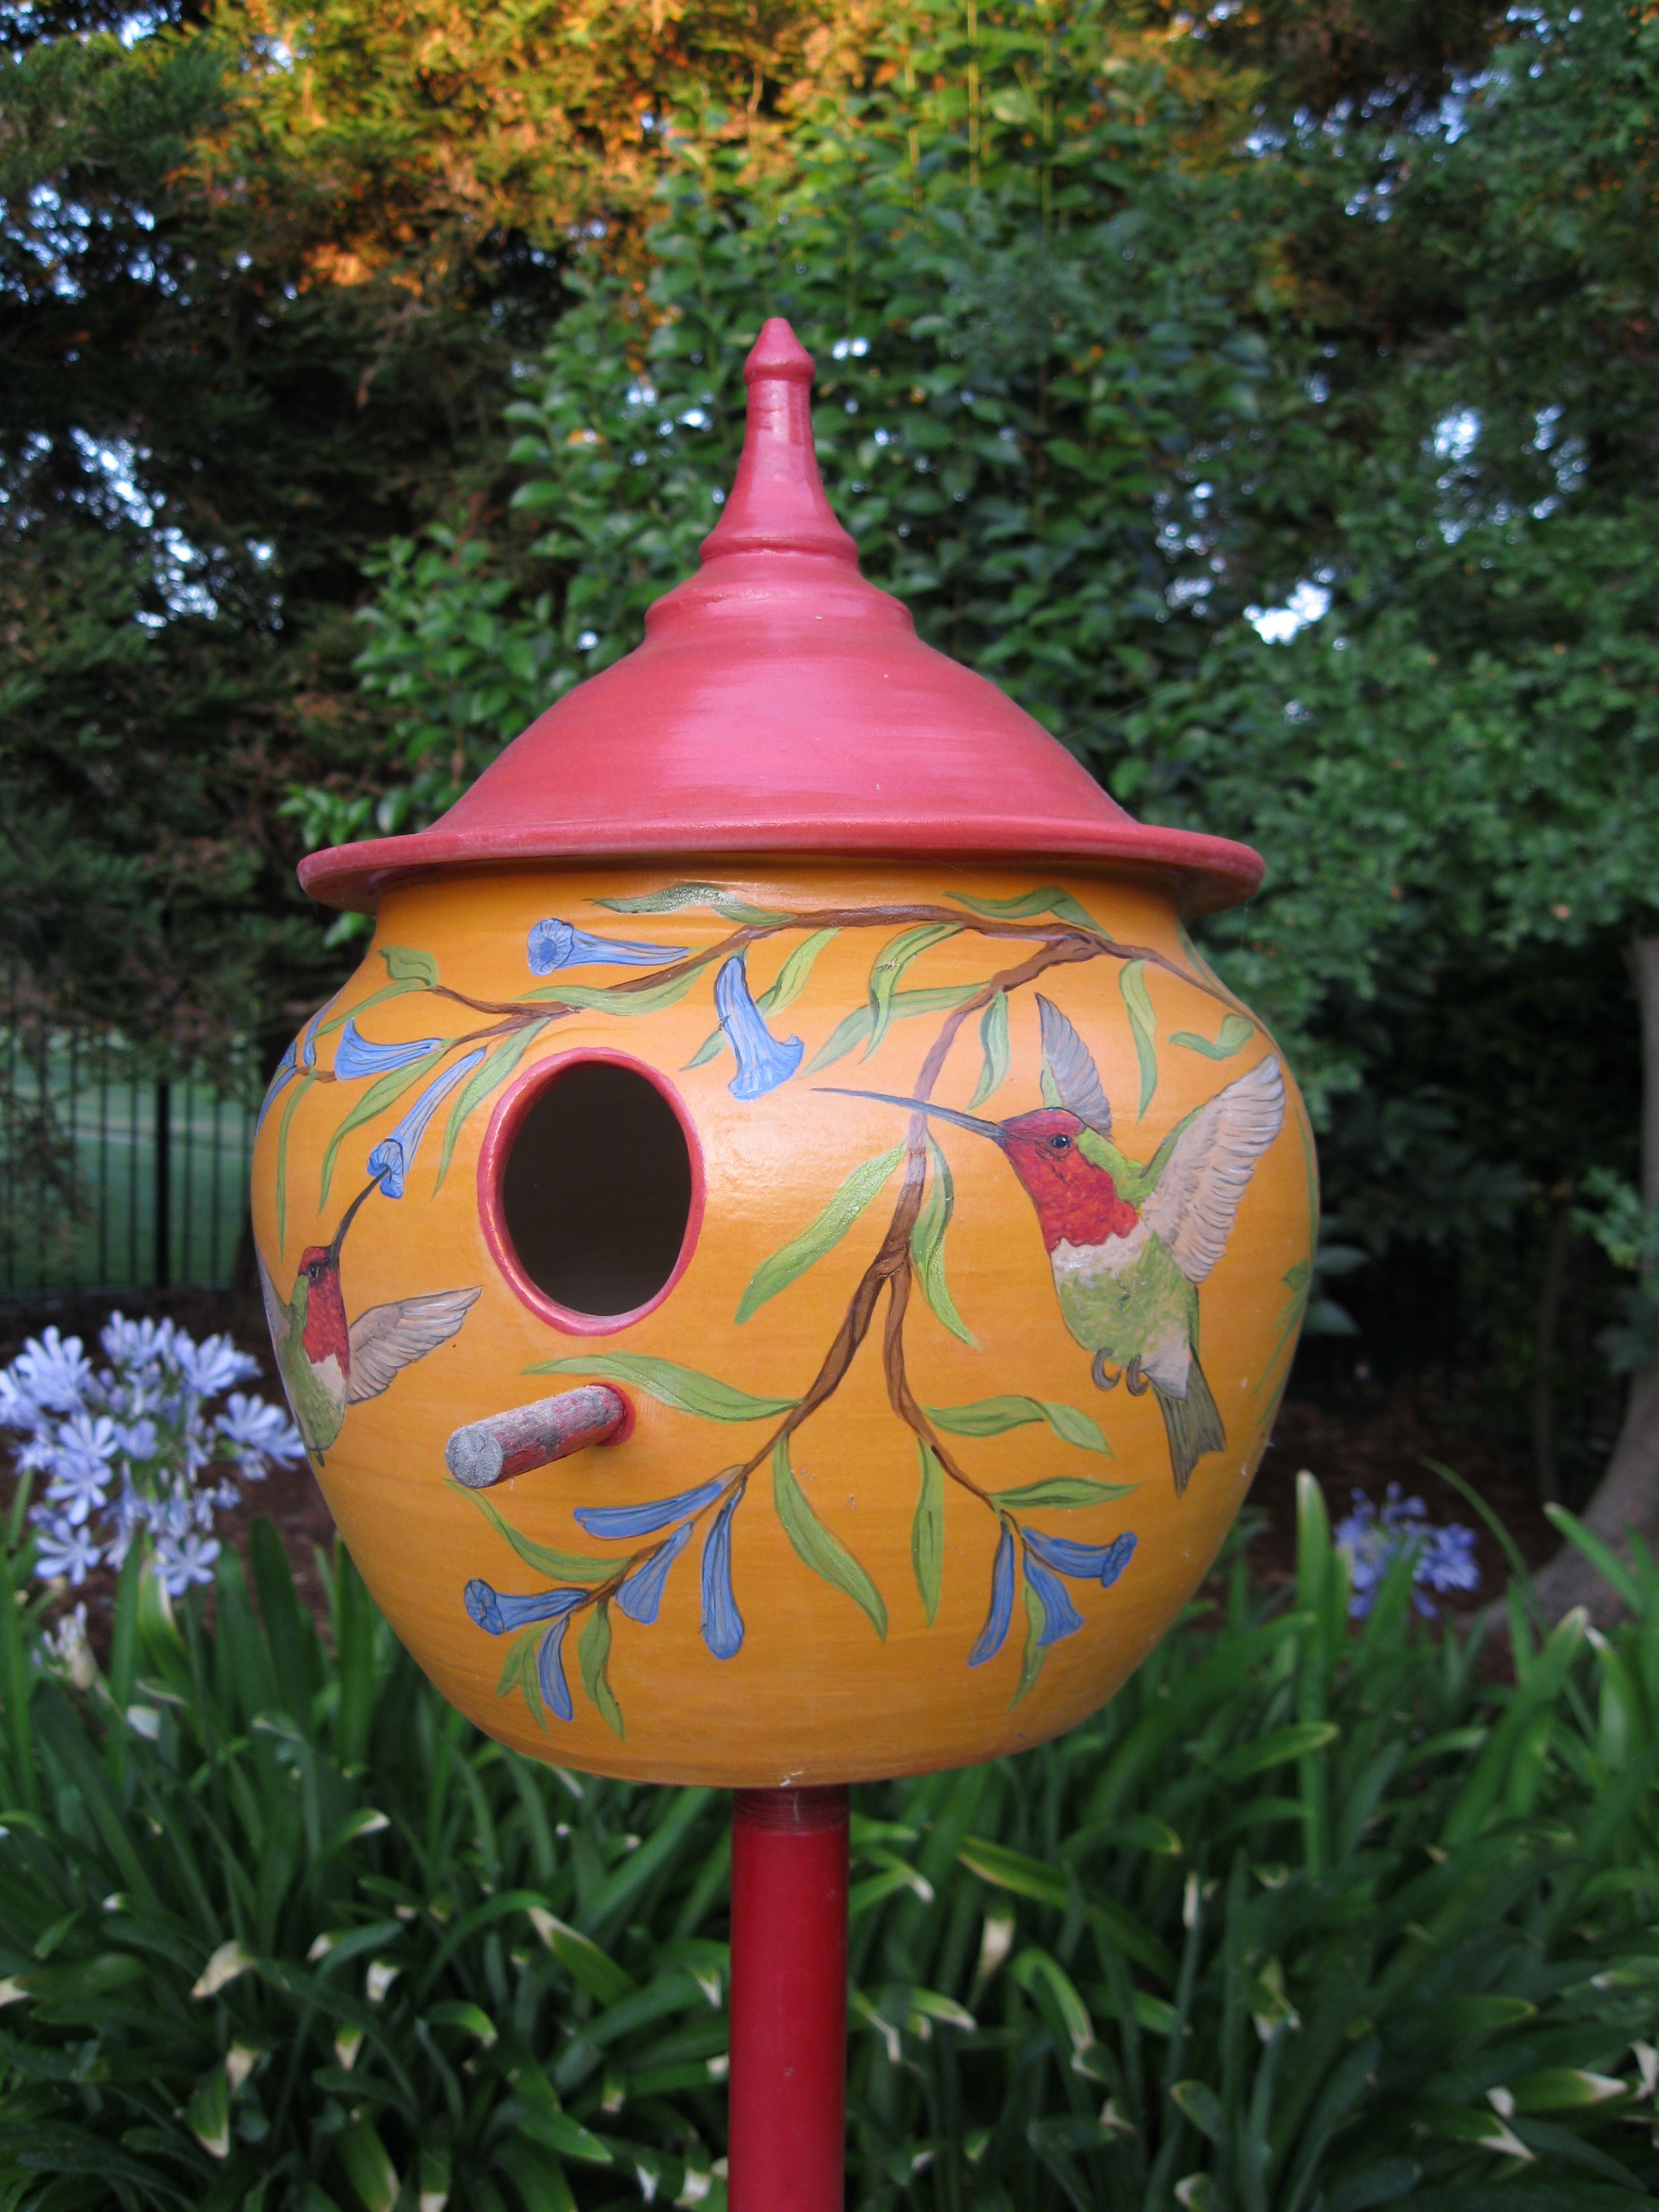 Colorful Ceramic Birdhouse with Hummingbird and penstemon design